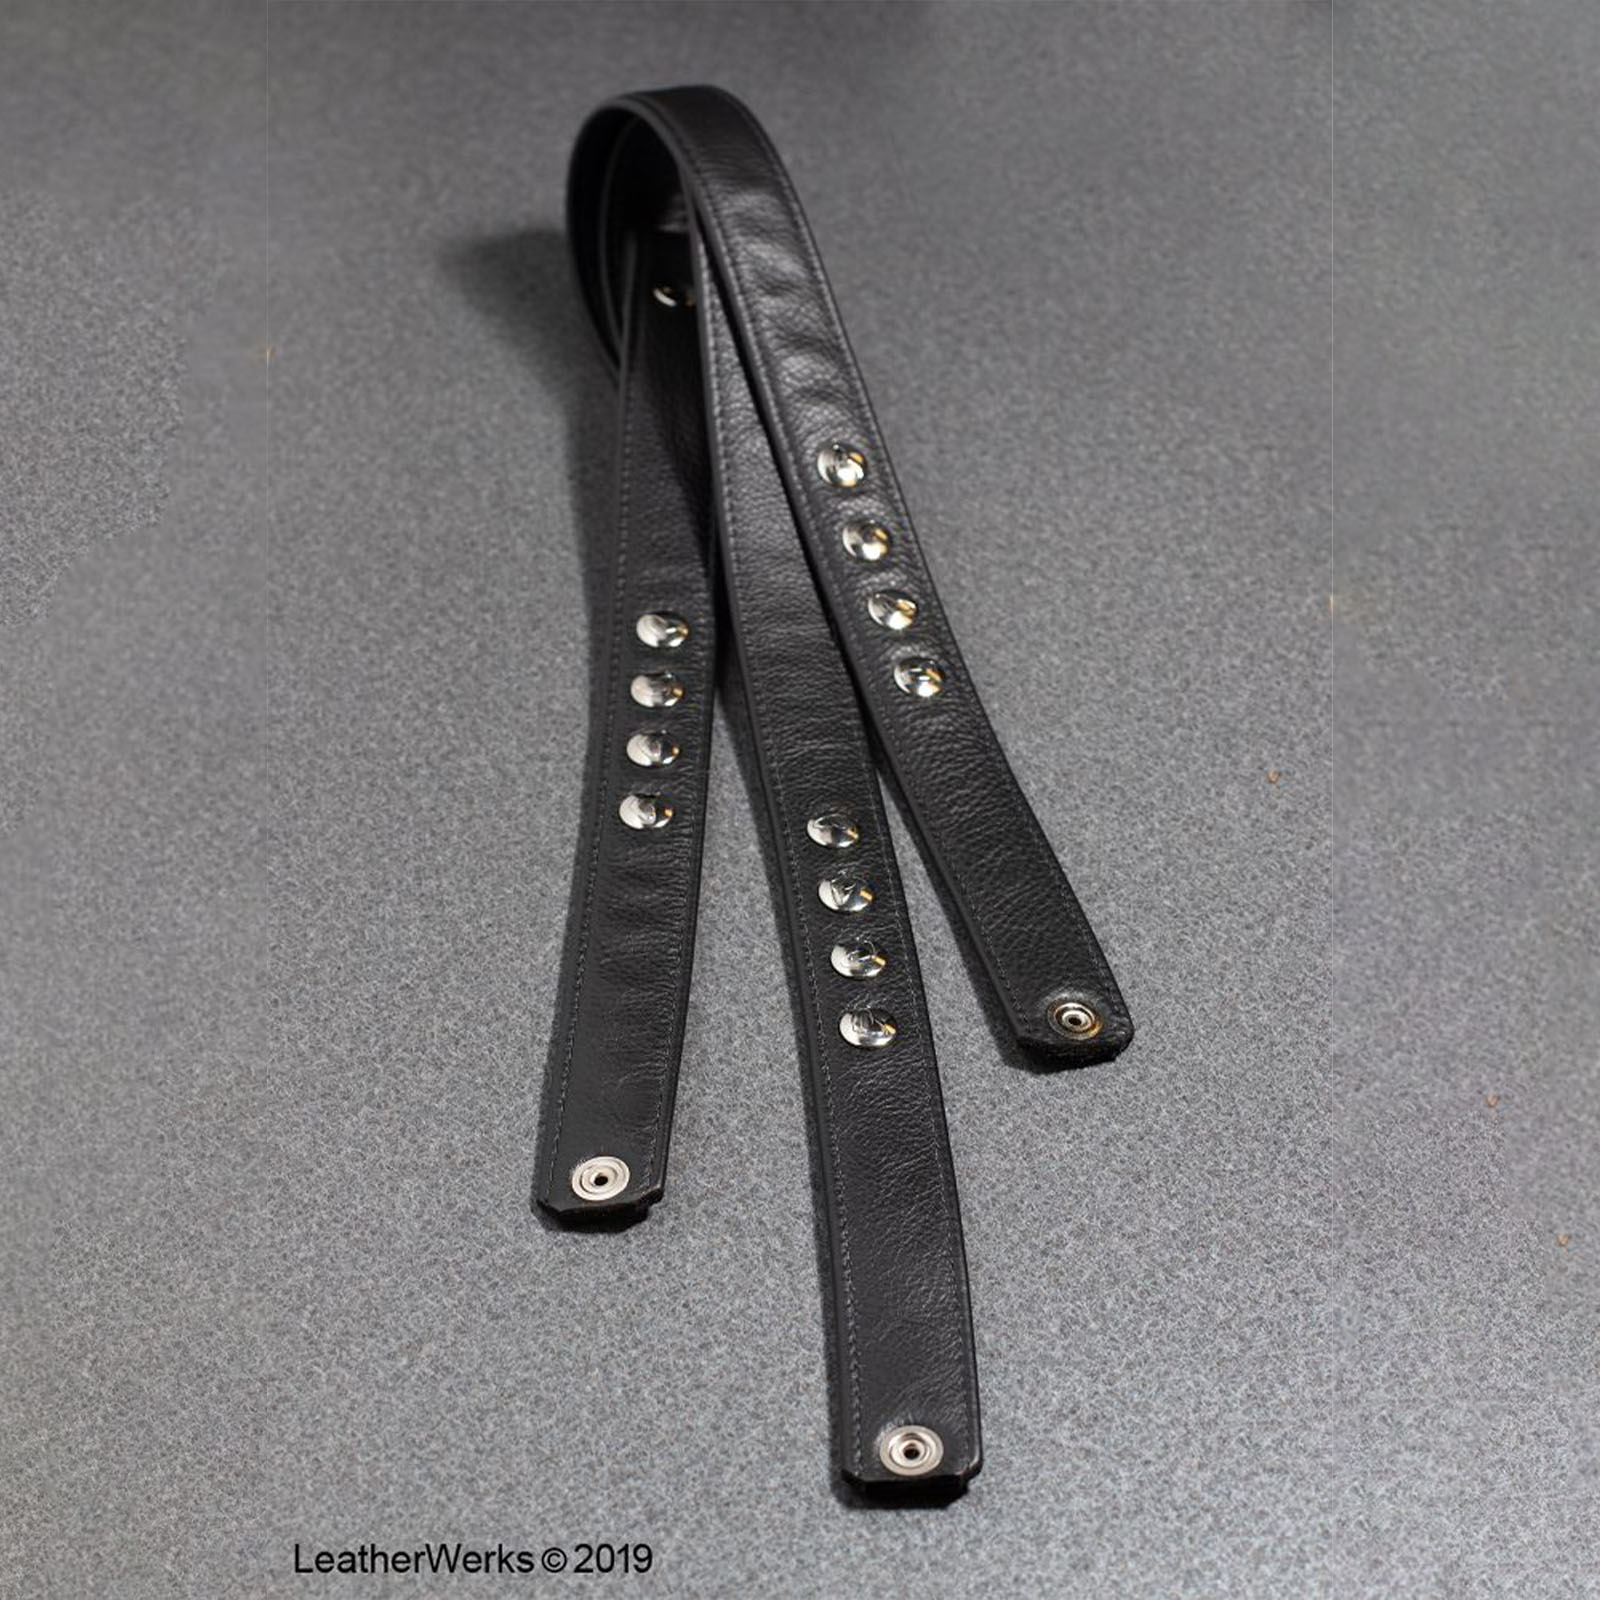 Harness Strap - LeatherWerks